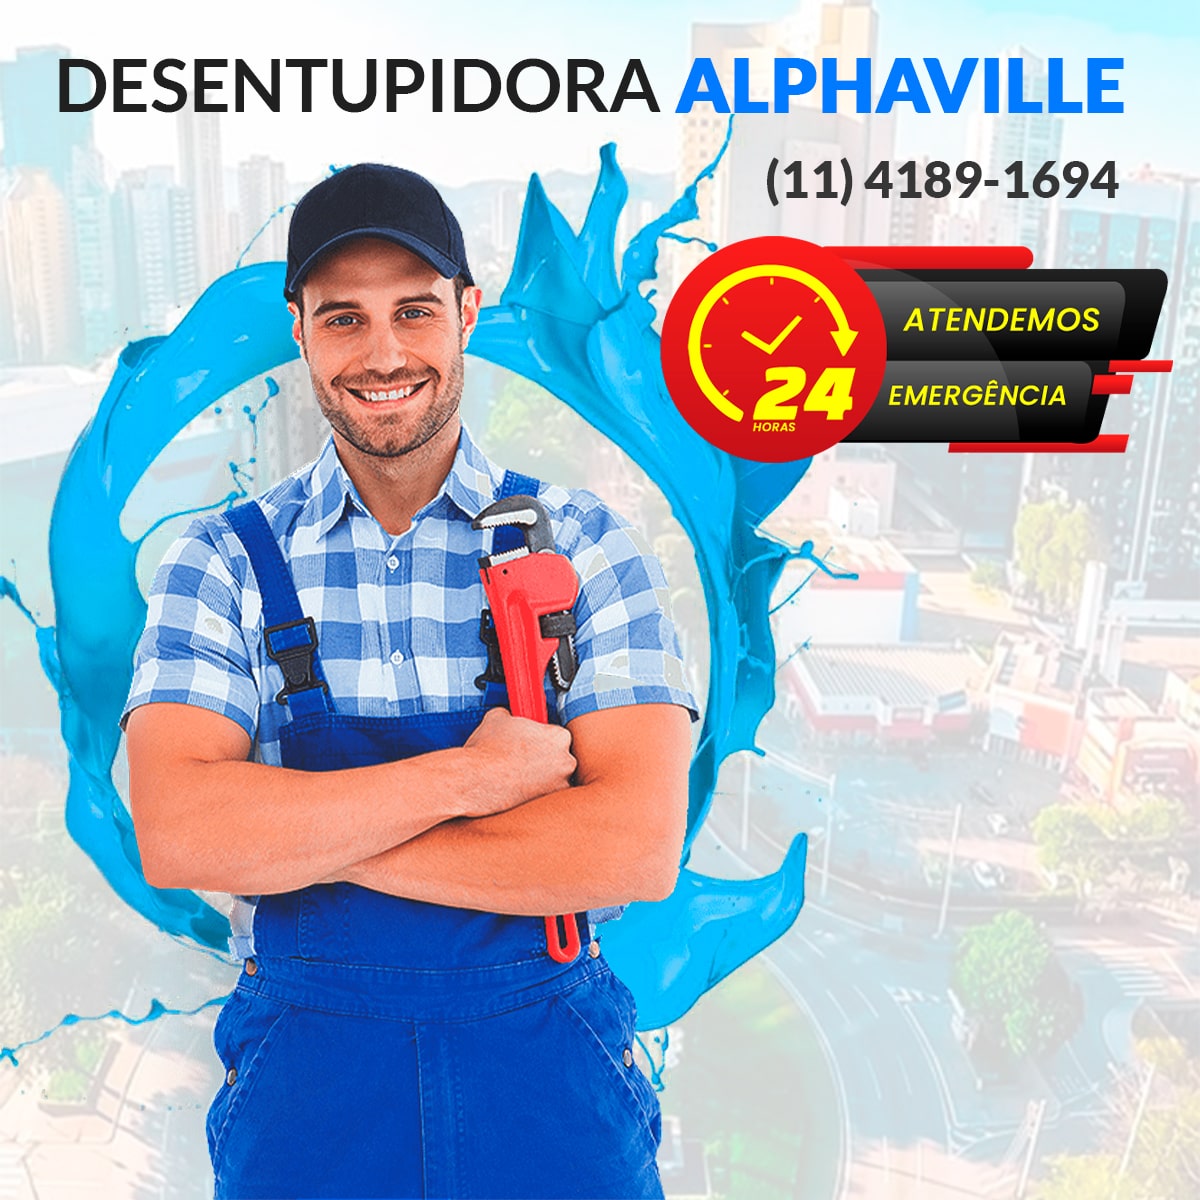 Desentupidora Alphaville 24 Horas (11) 4189-1694